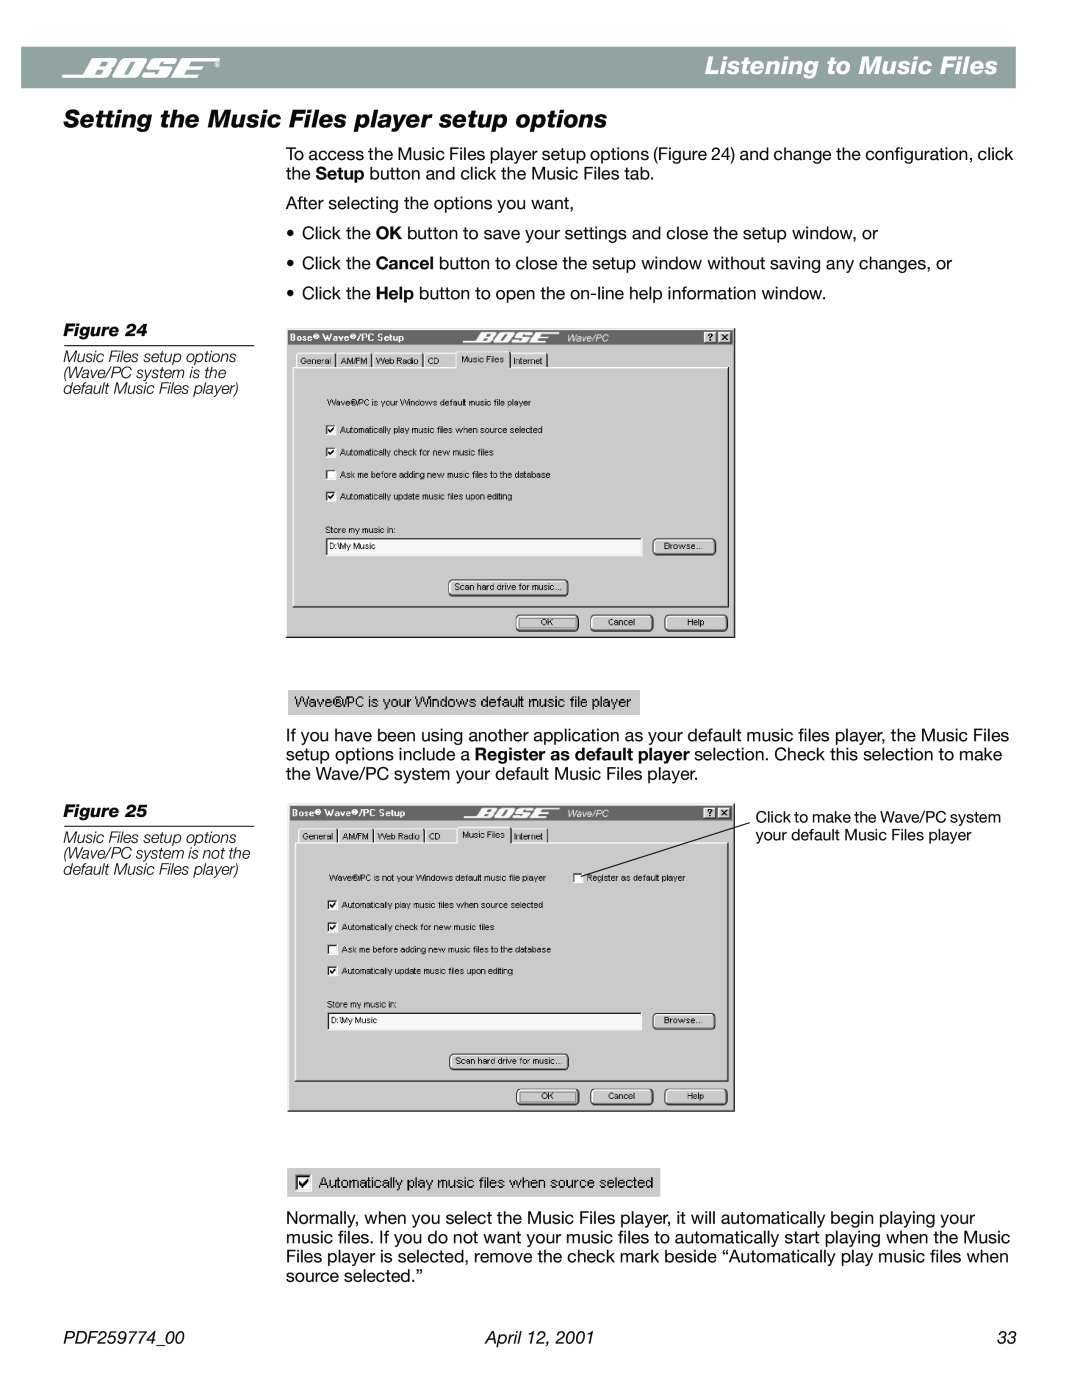 Bose PDF259774_00 manual Setting the Music Files player setup options, Listening to Music Files 